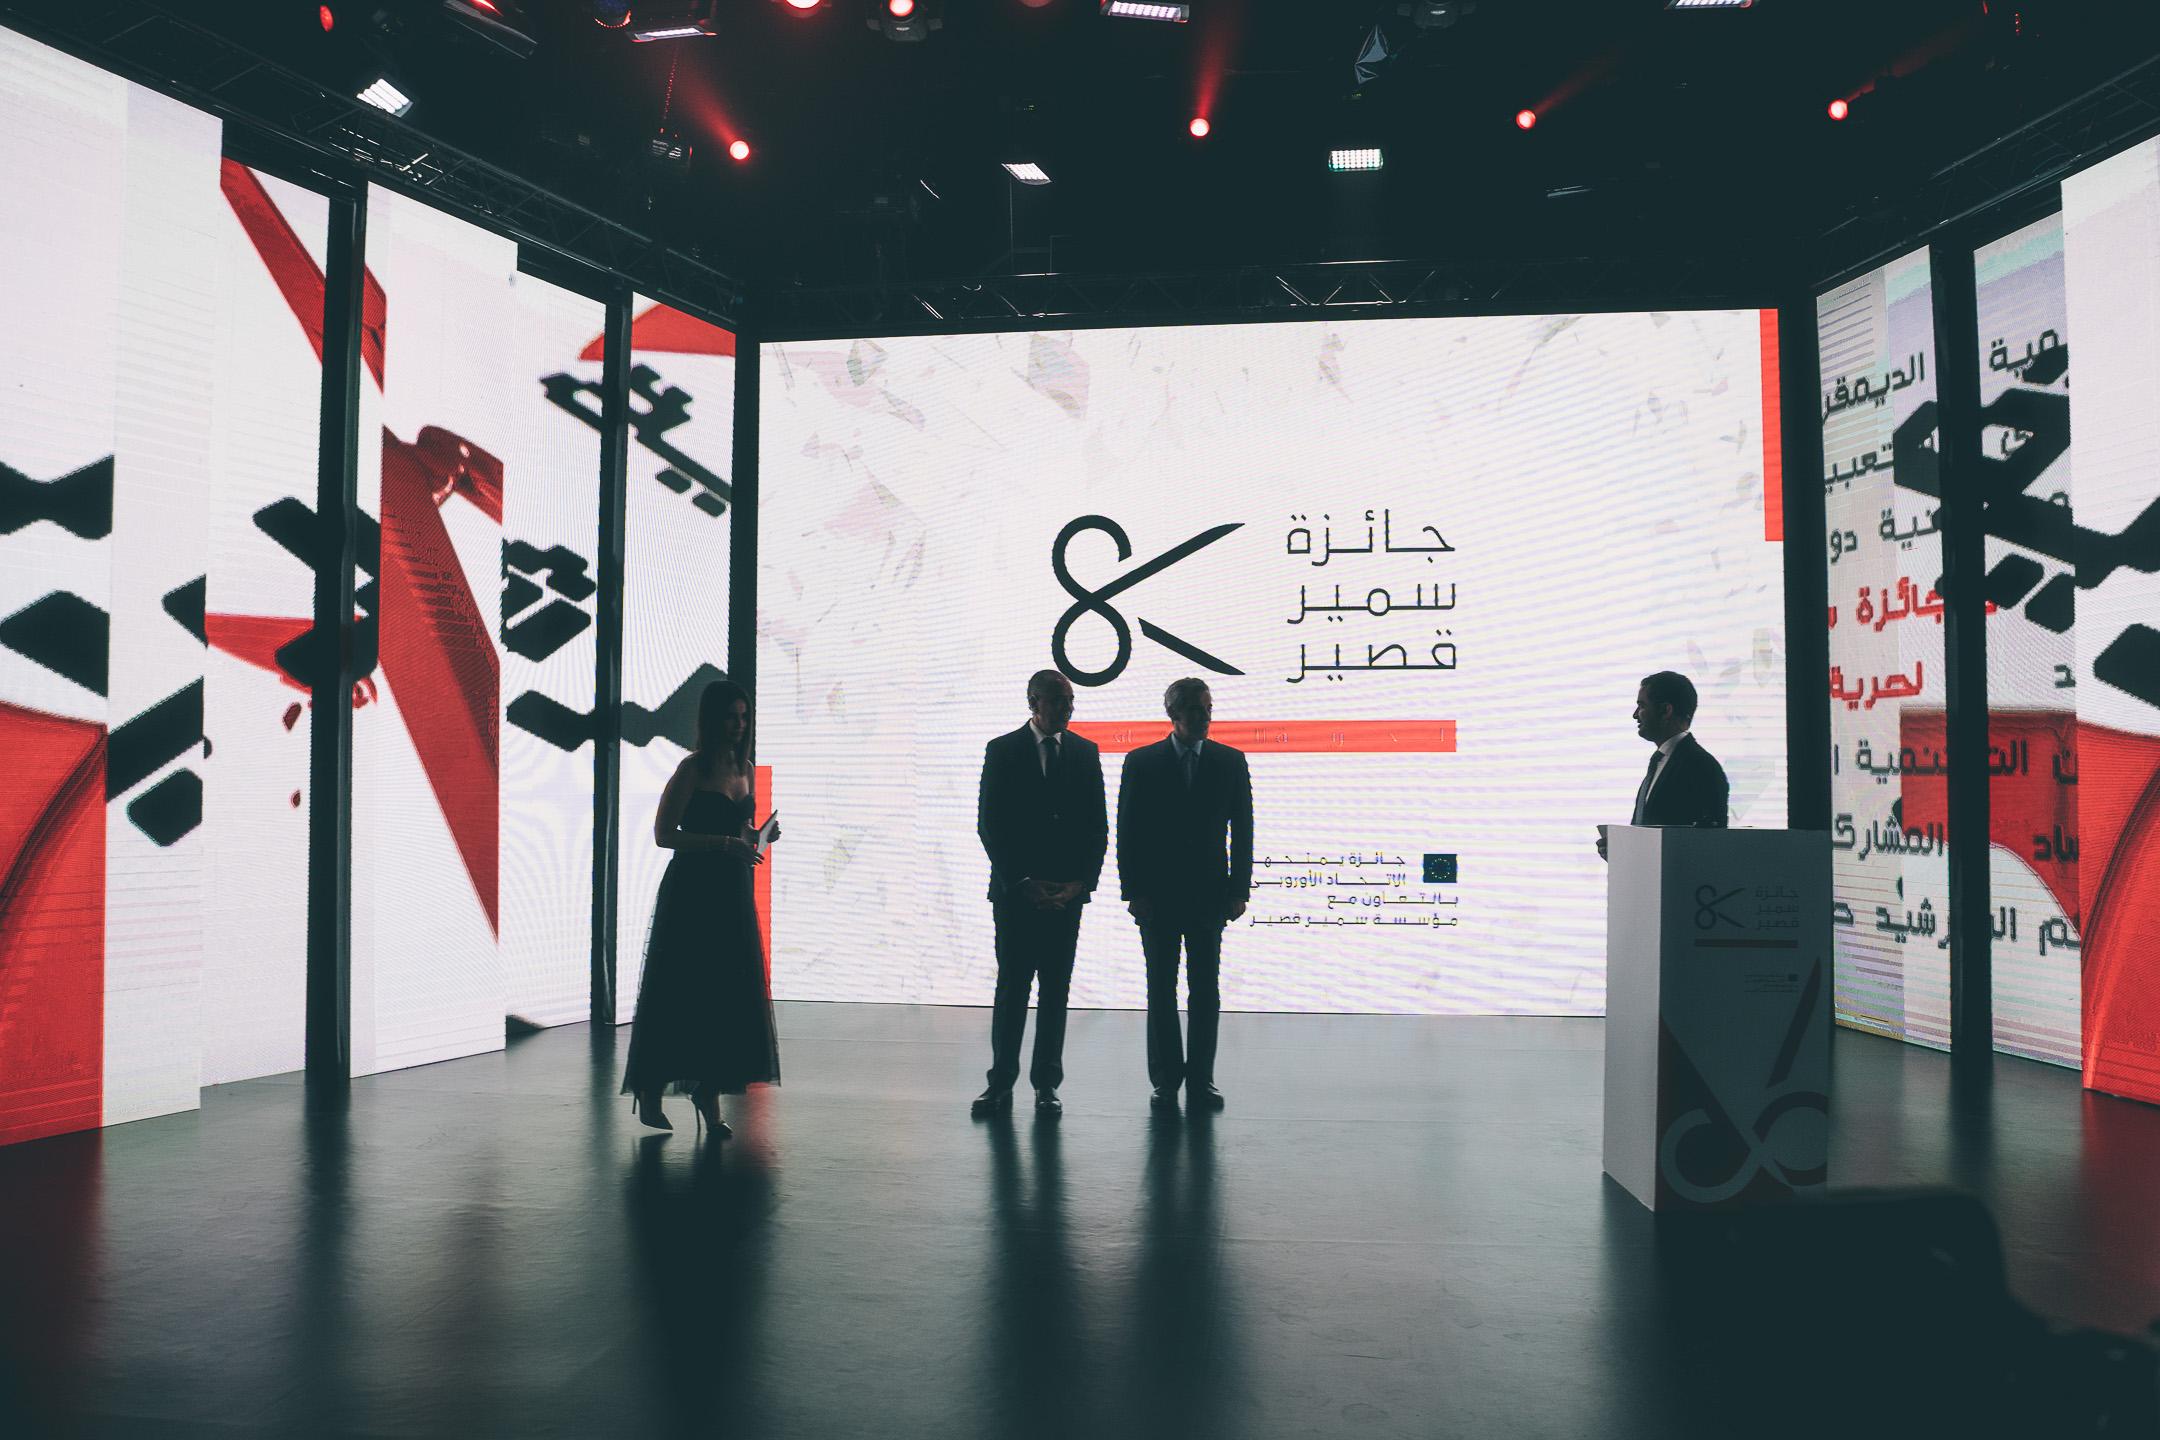 Samir Kassir Award: 2021 and 2022 Edition Lebanon